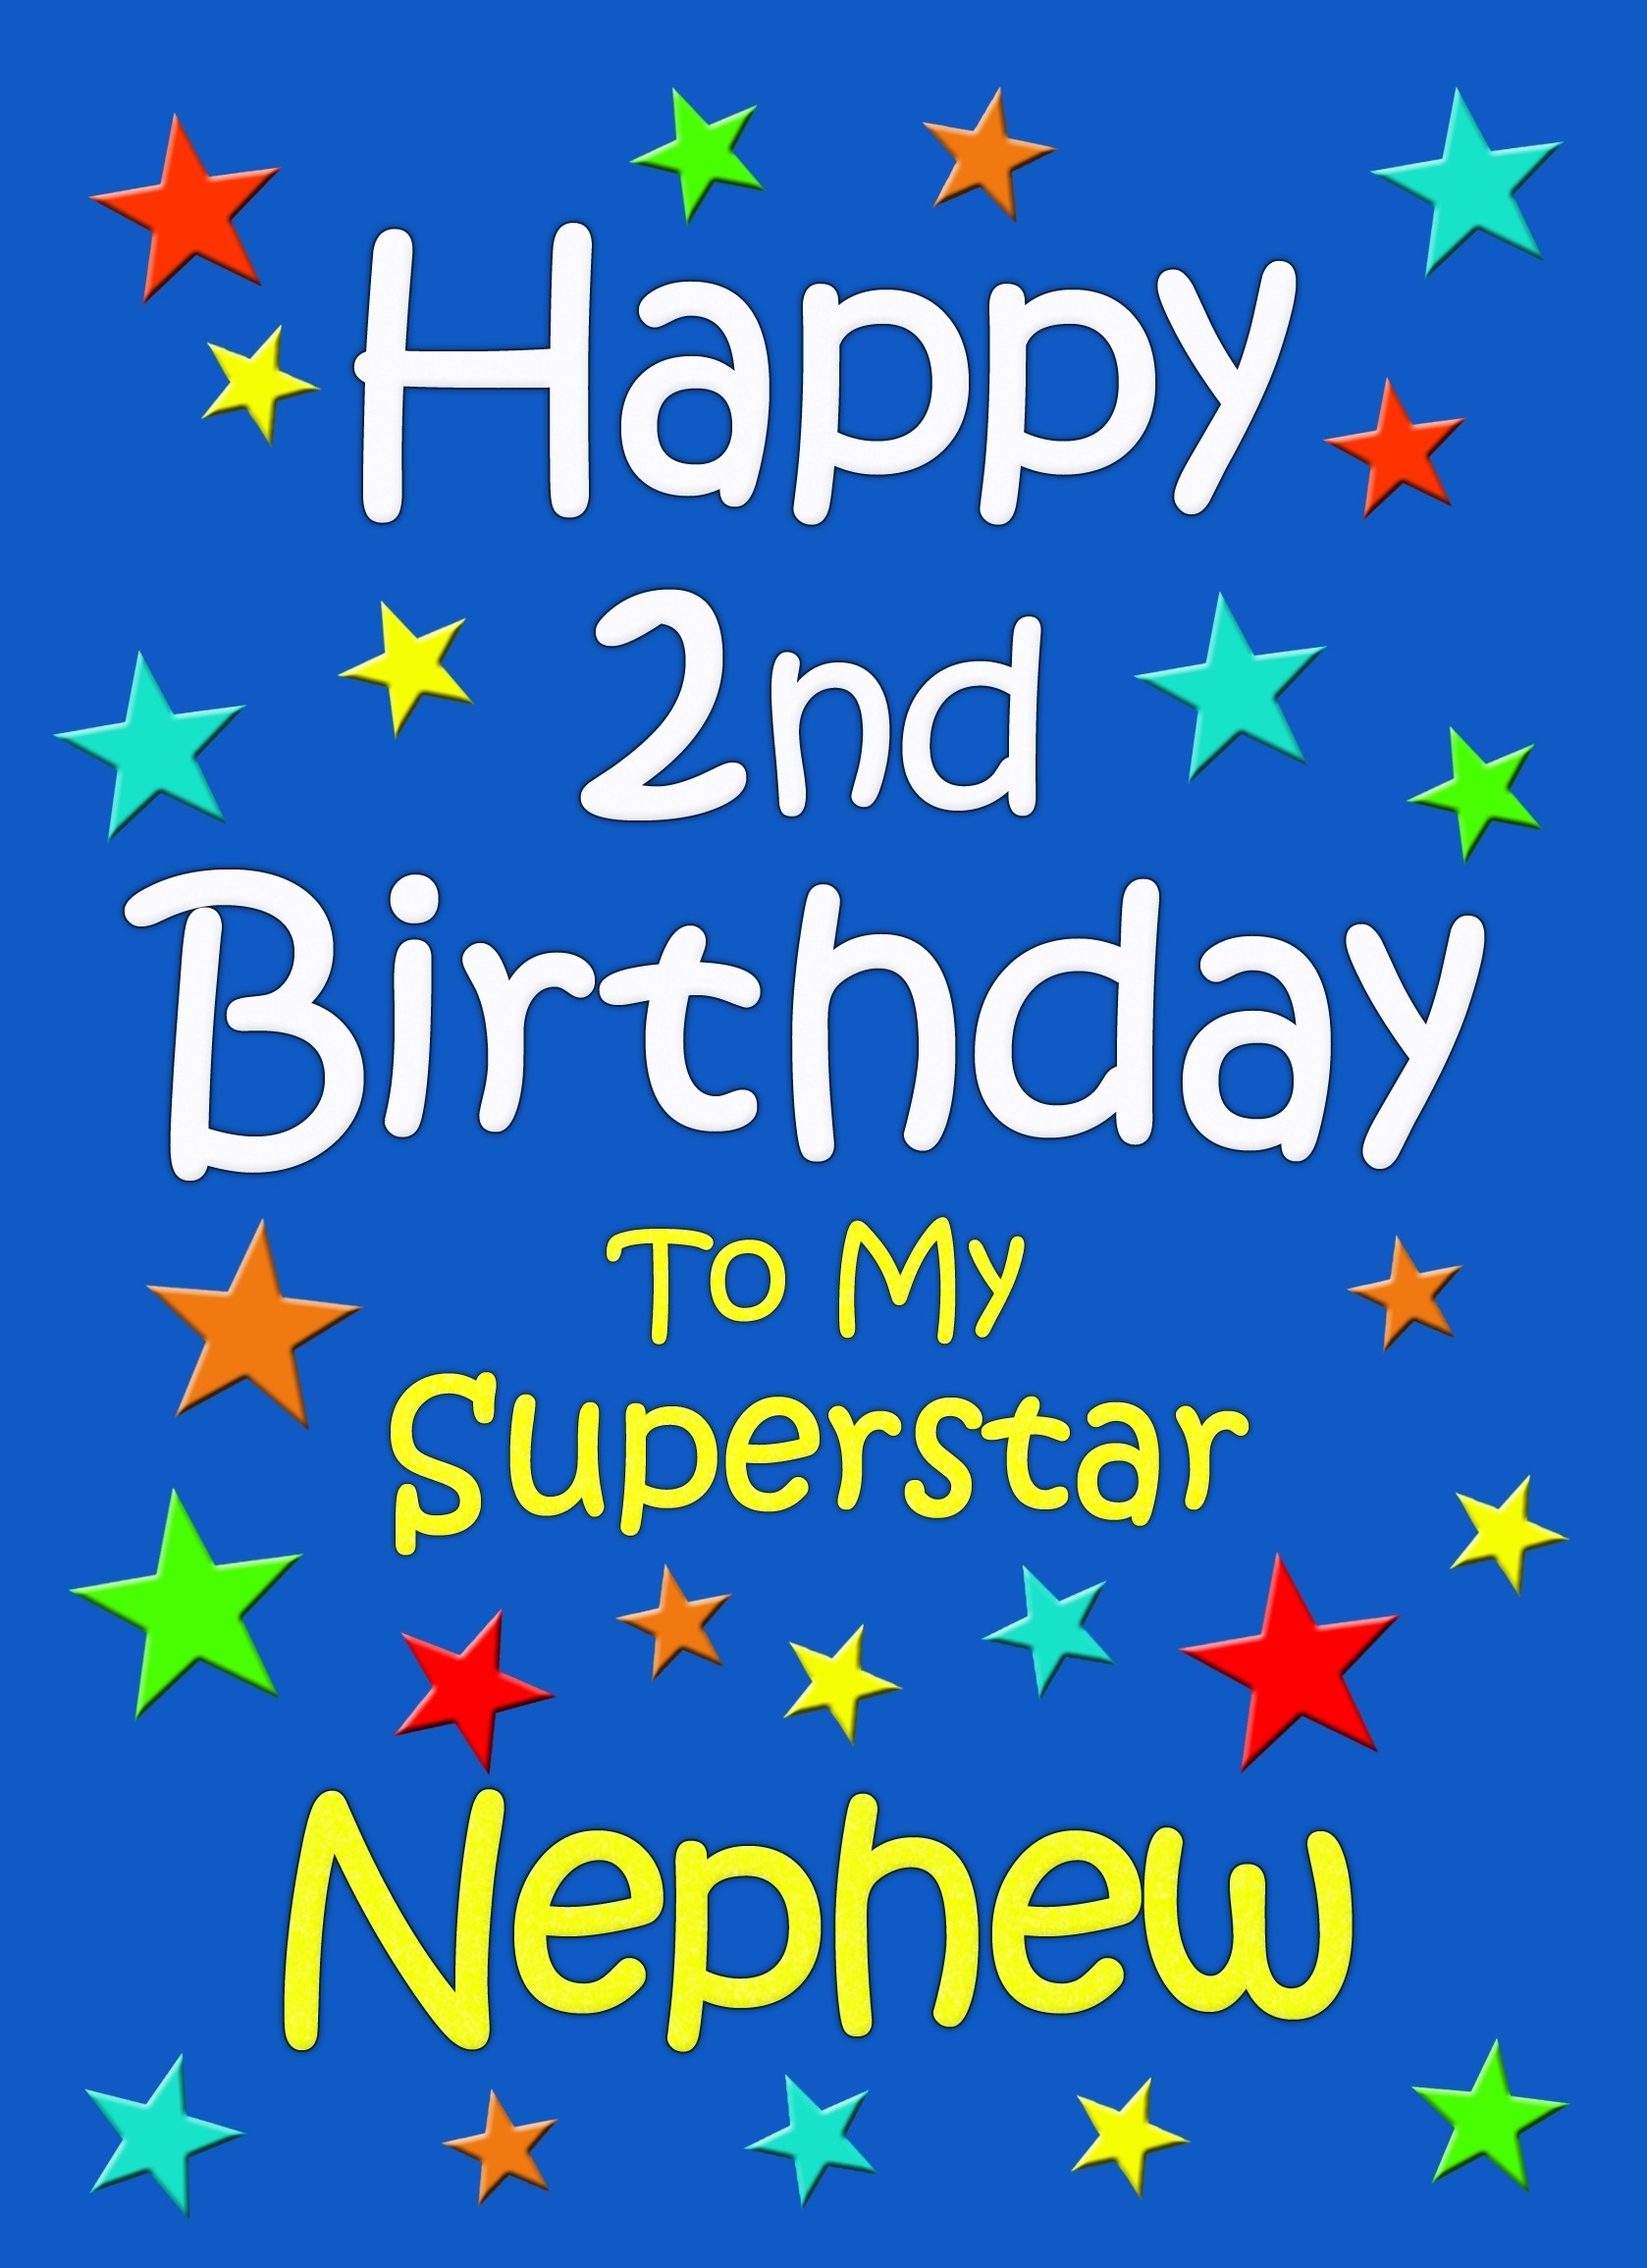 Nephew 2nd Birthday Card (Blue)